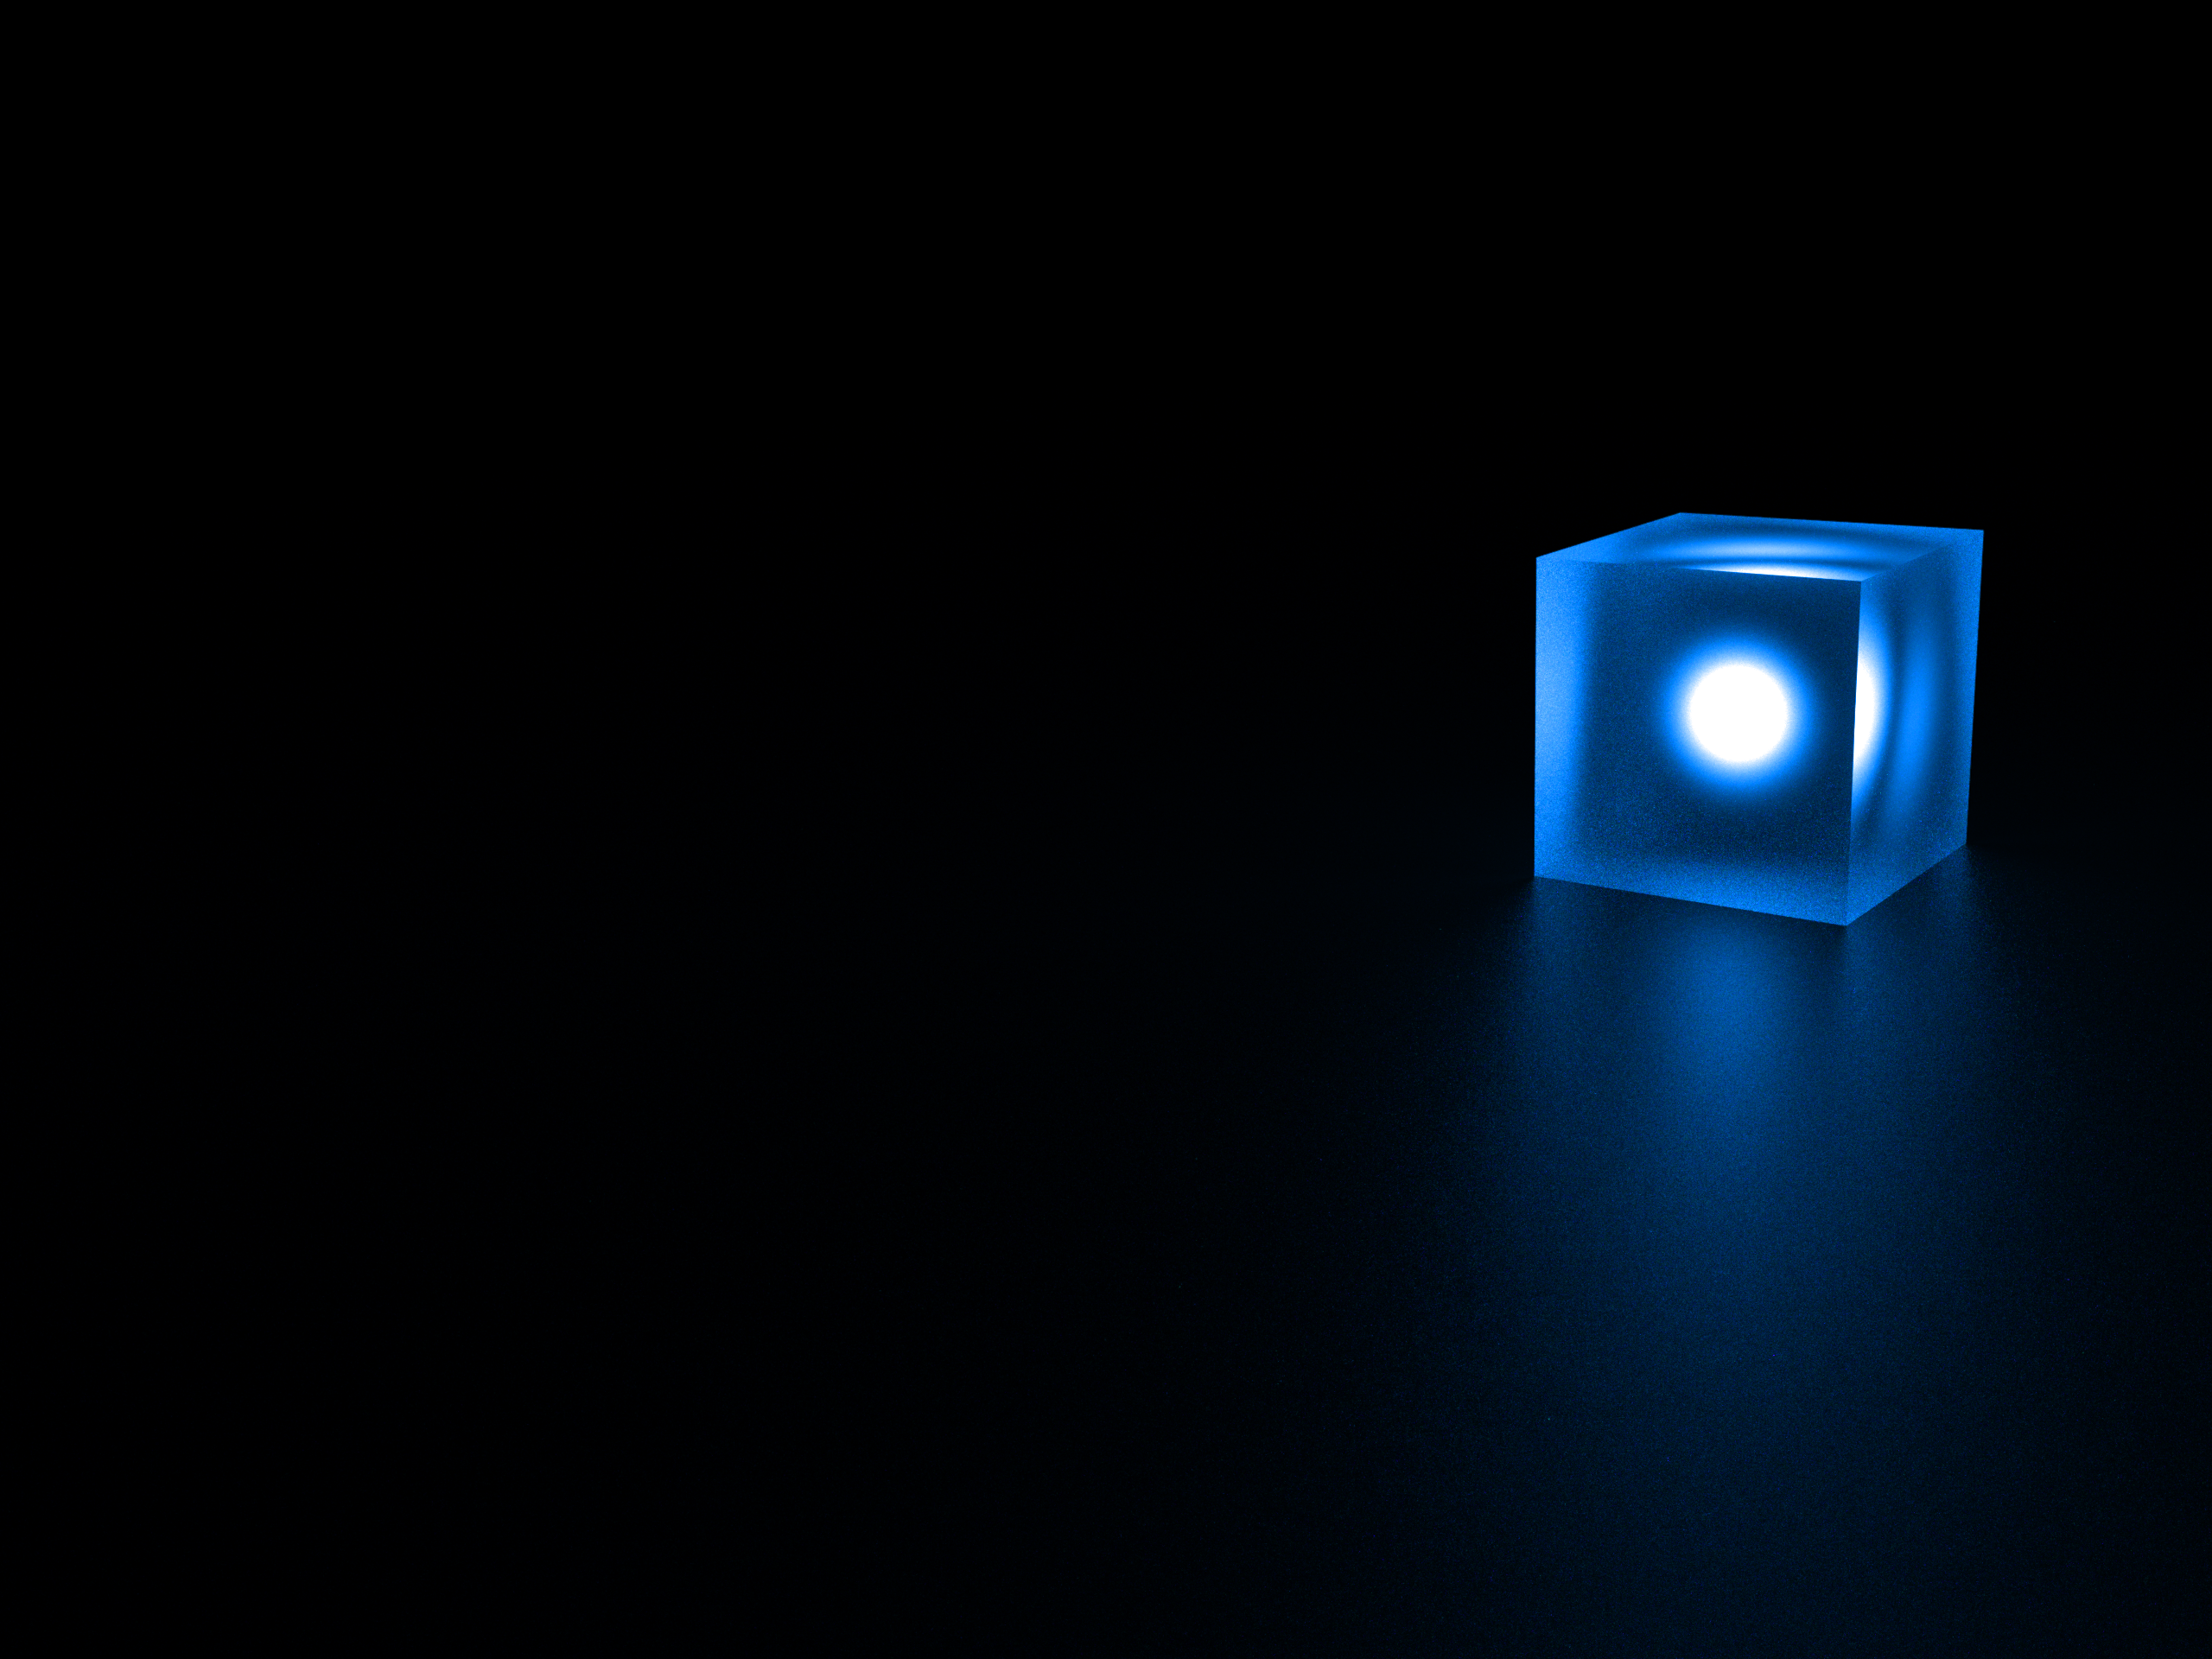 Blue Cube Wallpaper 2560x1920 Blue Cube Glossy Shine 3D Render 2560x1920